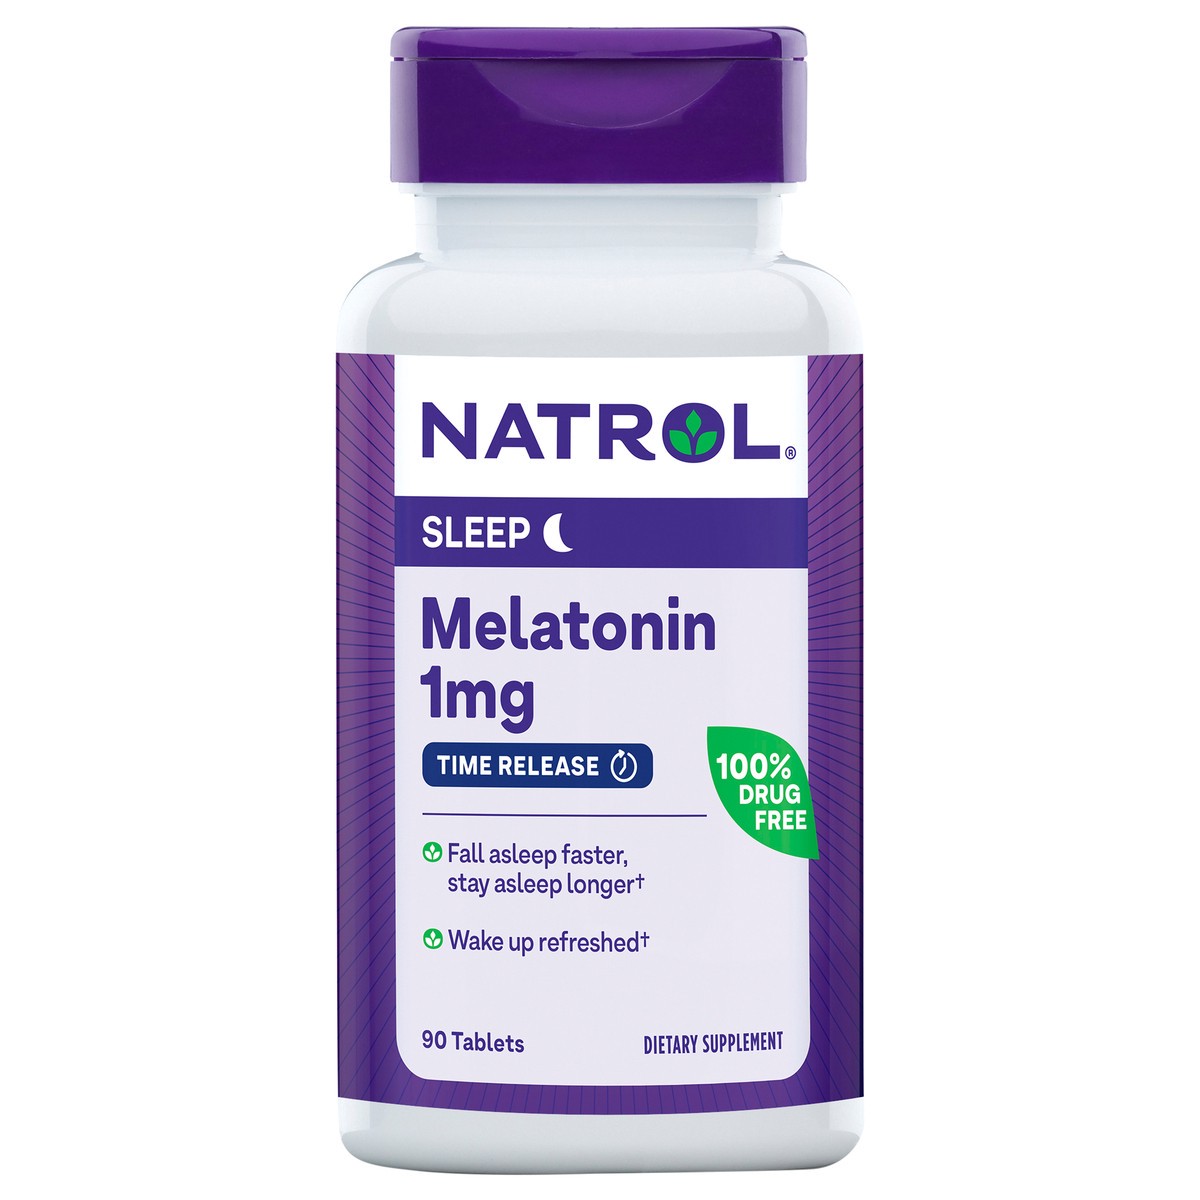 slide 1 of 2, Natrol Melatonin Time Release Sleep Aid Tablets, with Vitamin B-6, Fall Asleep Faster, Stay Asleep Longer, Dietary Supplement, Drug Free, 1mg, 90 Count, 90 ct